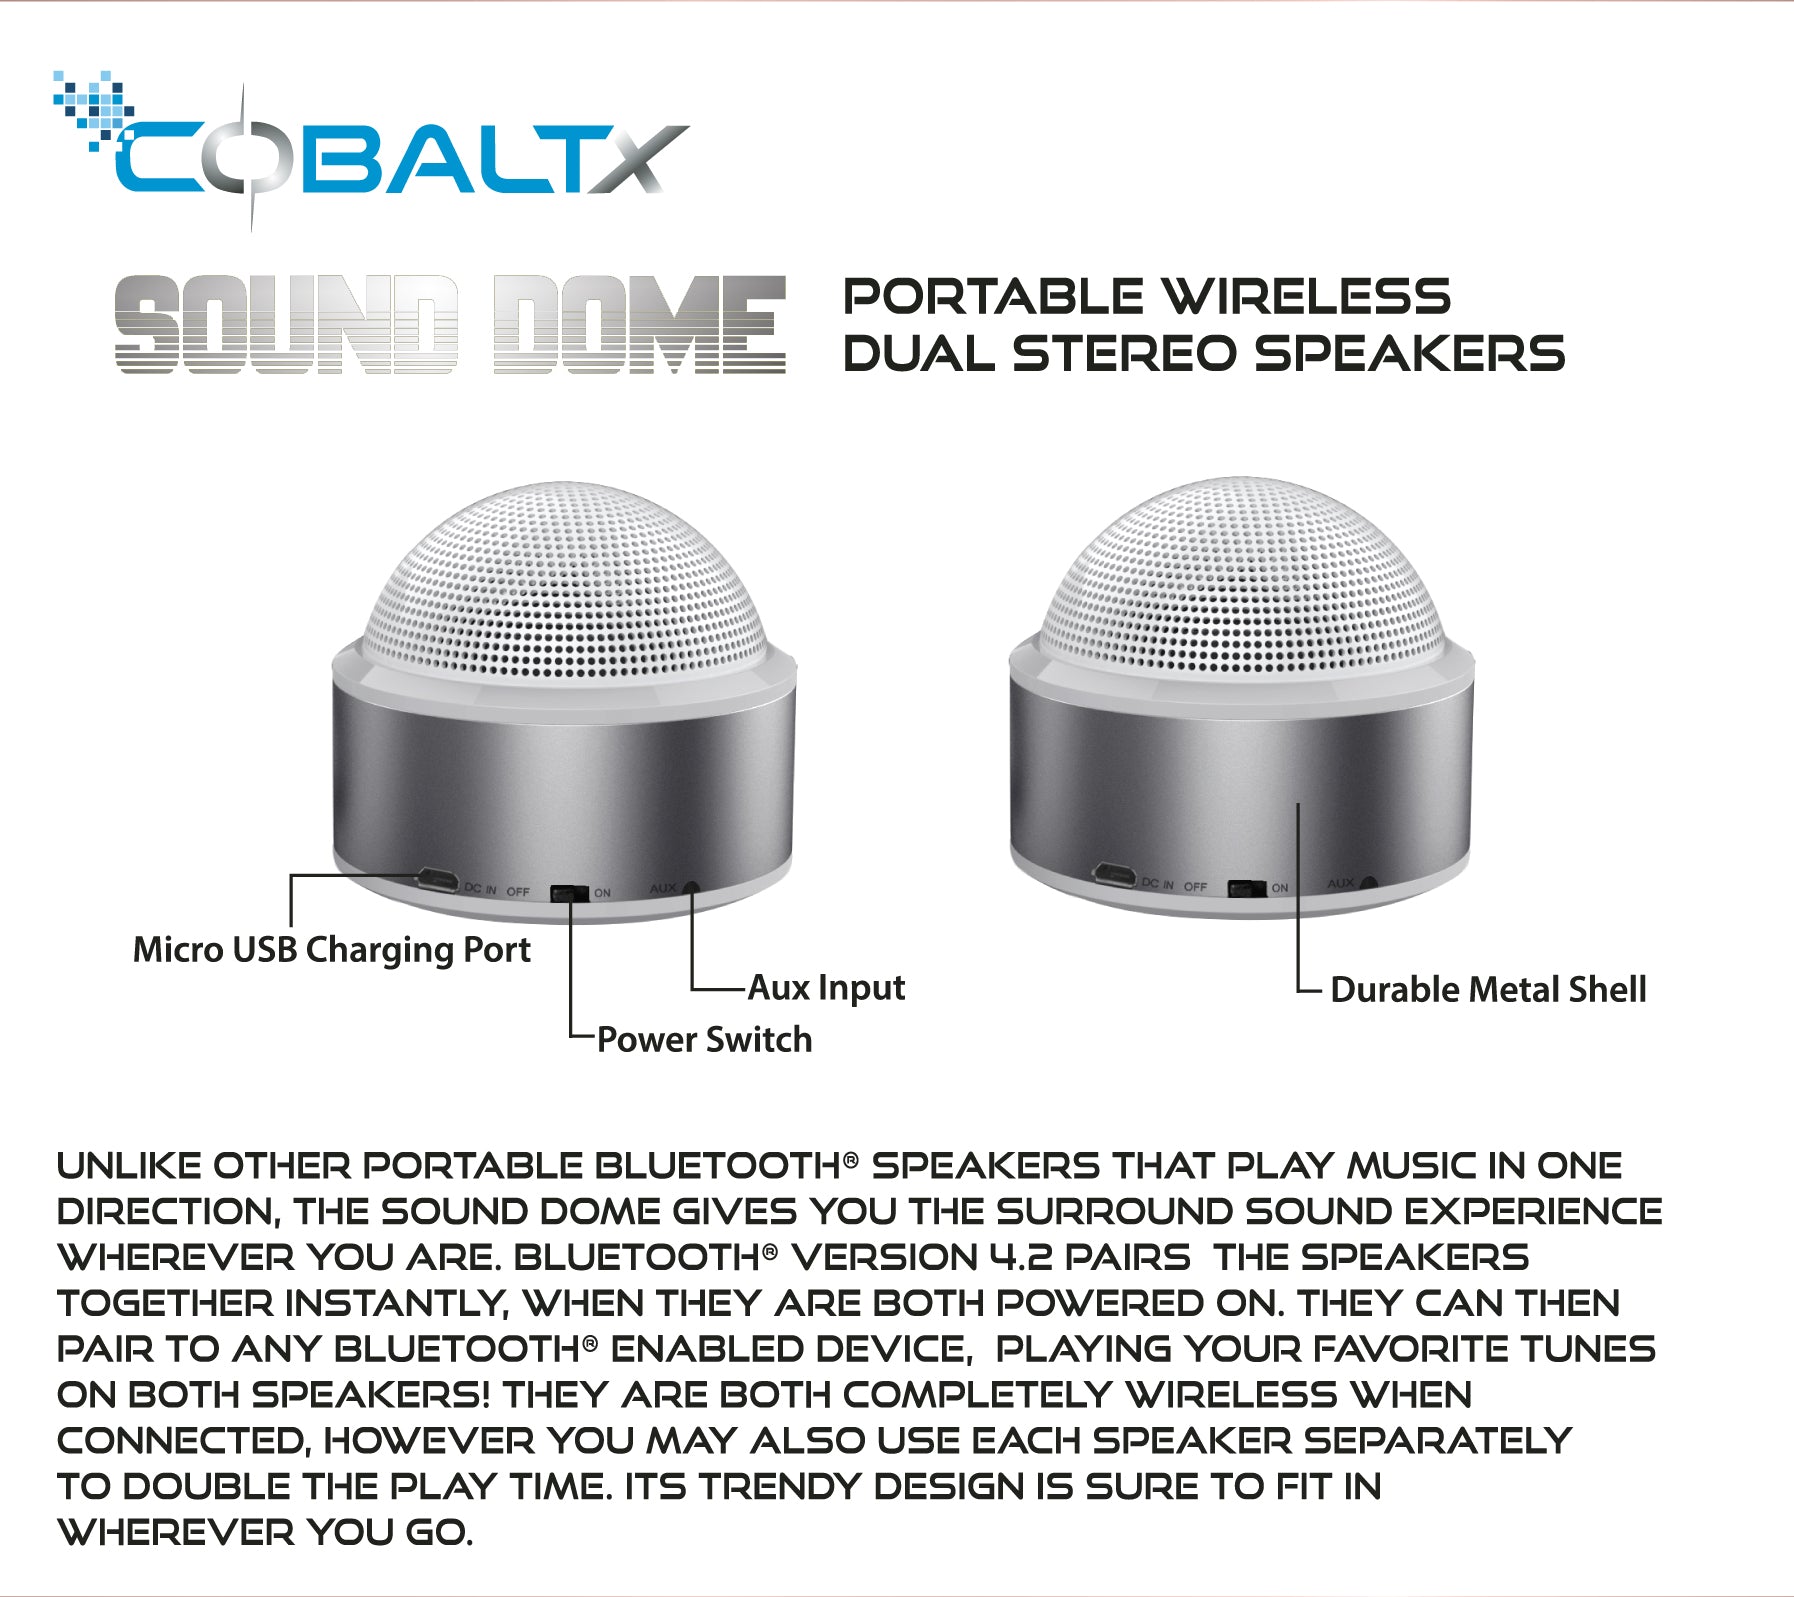 cobaltx wireless audio bar